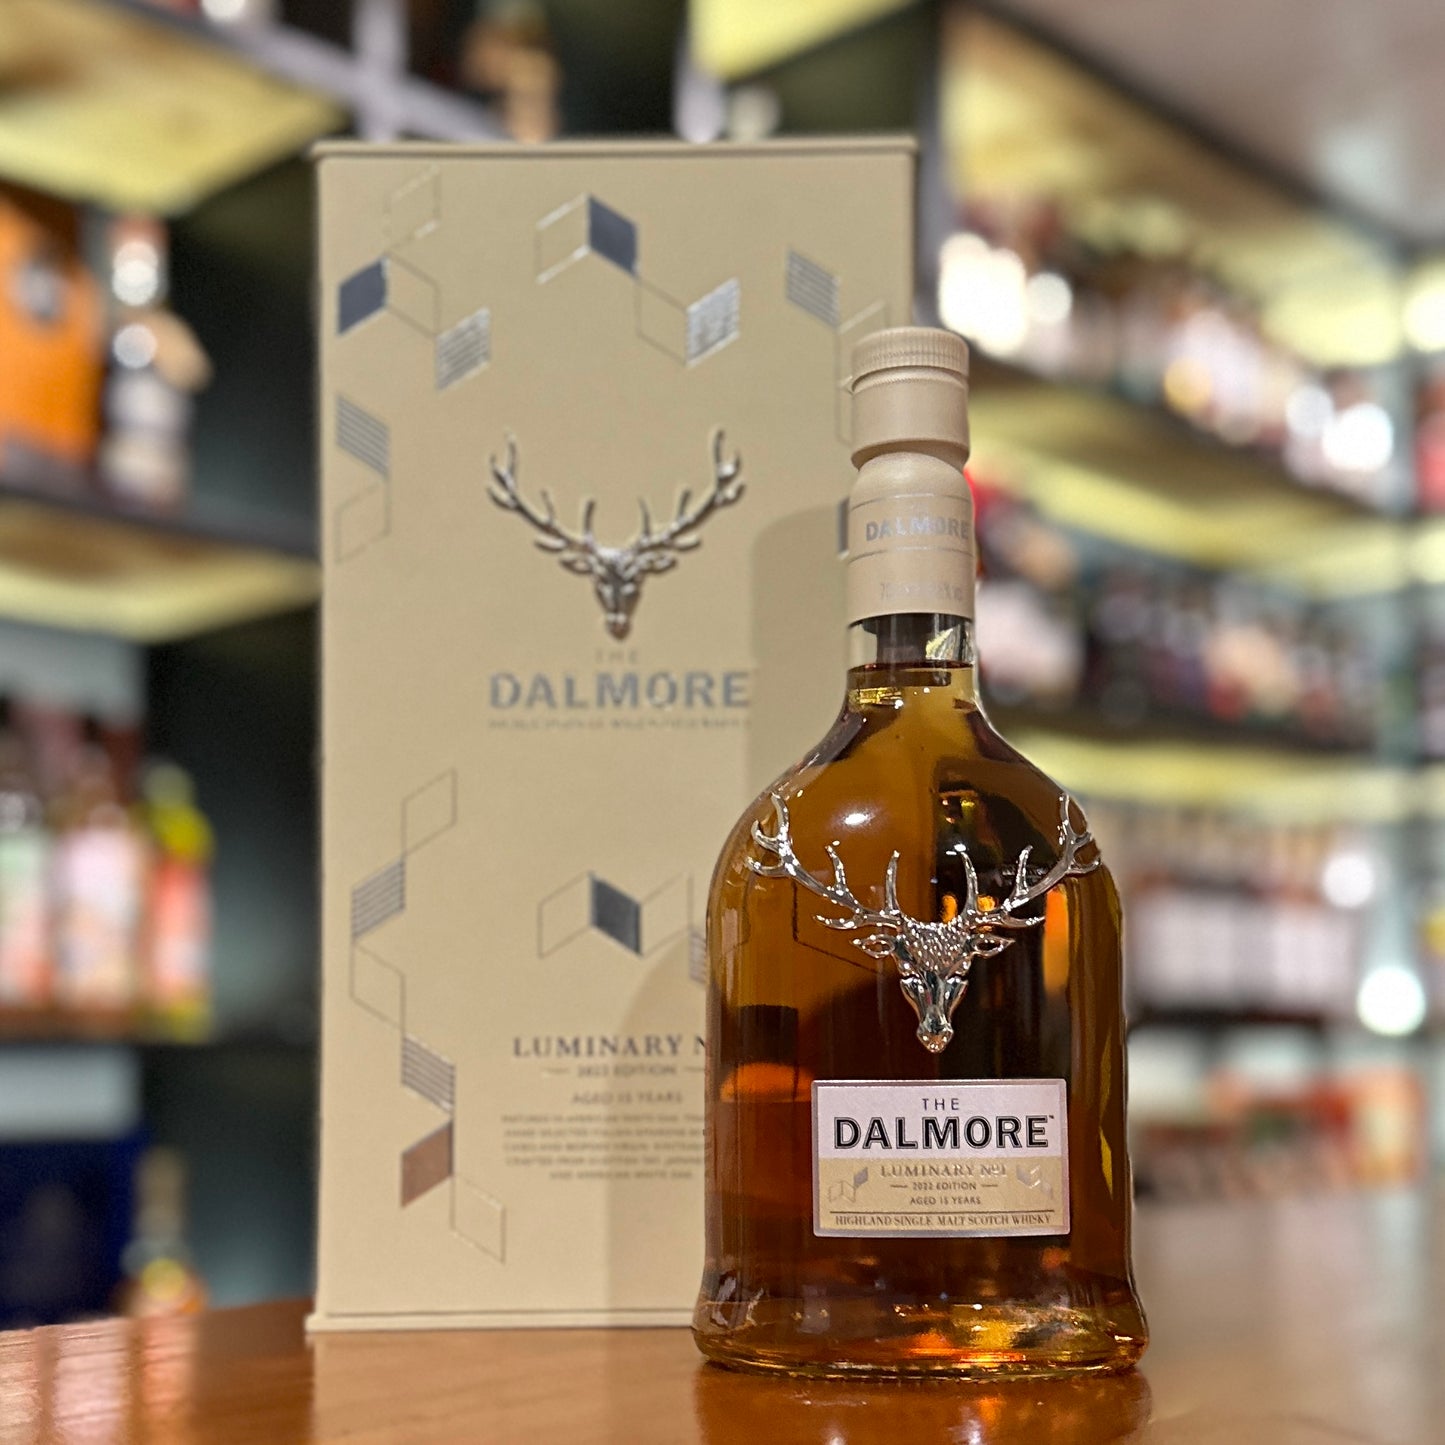 Dalmore Luminary No. 1 2022 Limited Edition Single Malt Scotch Whisky